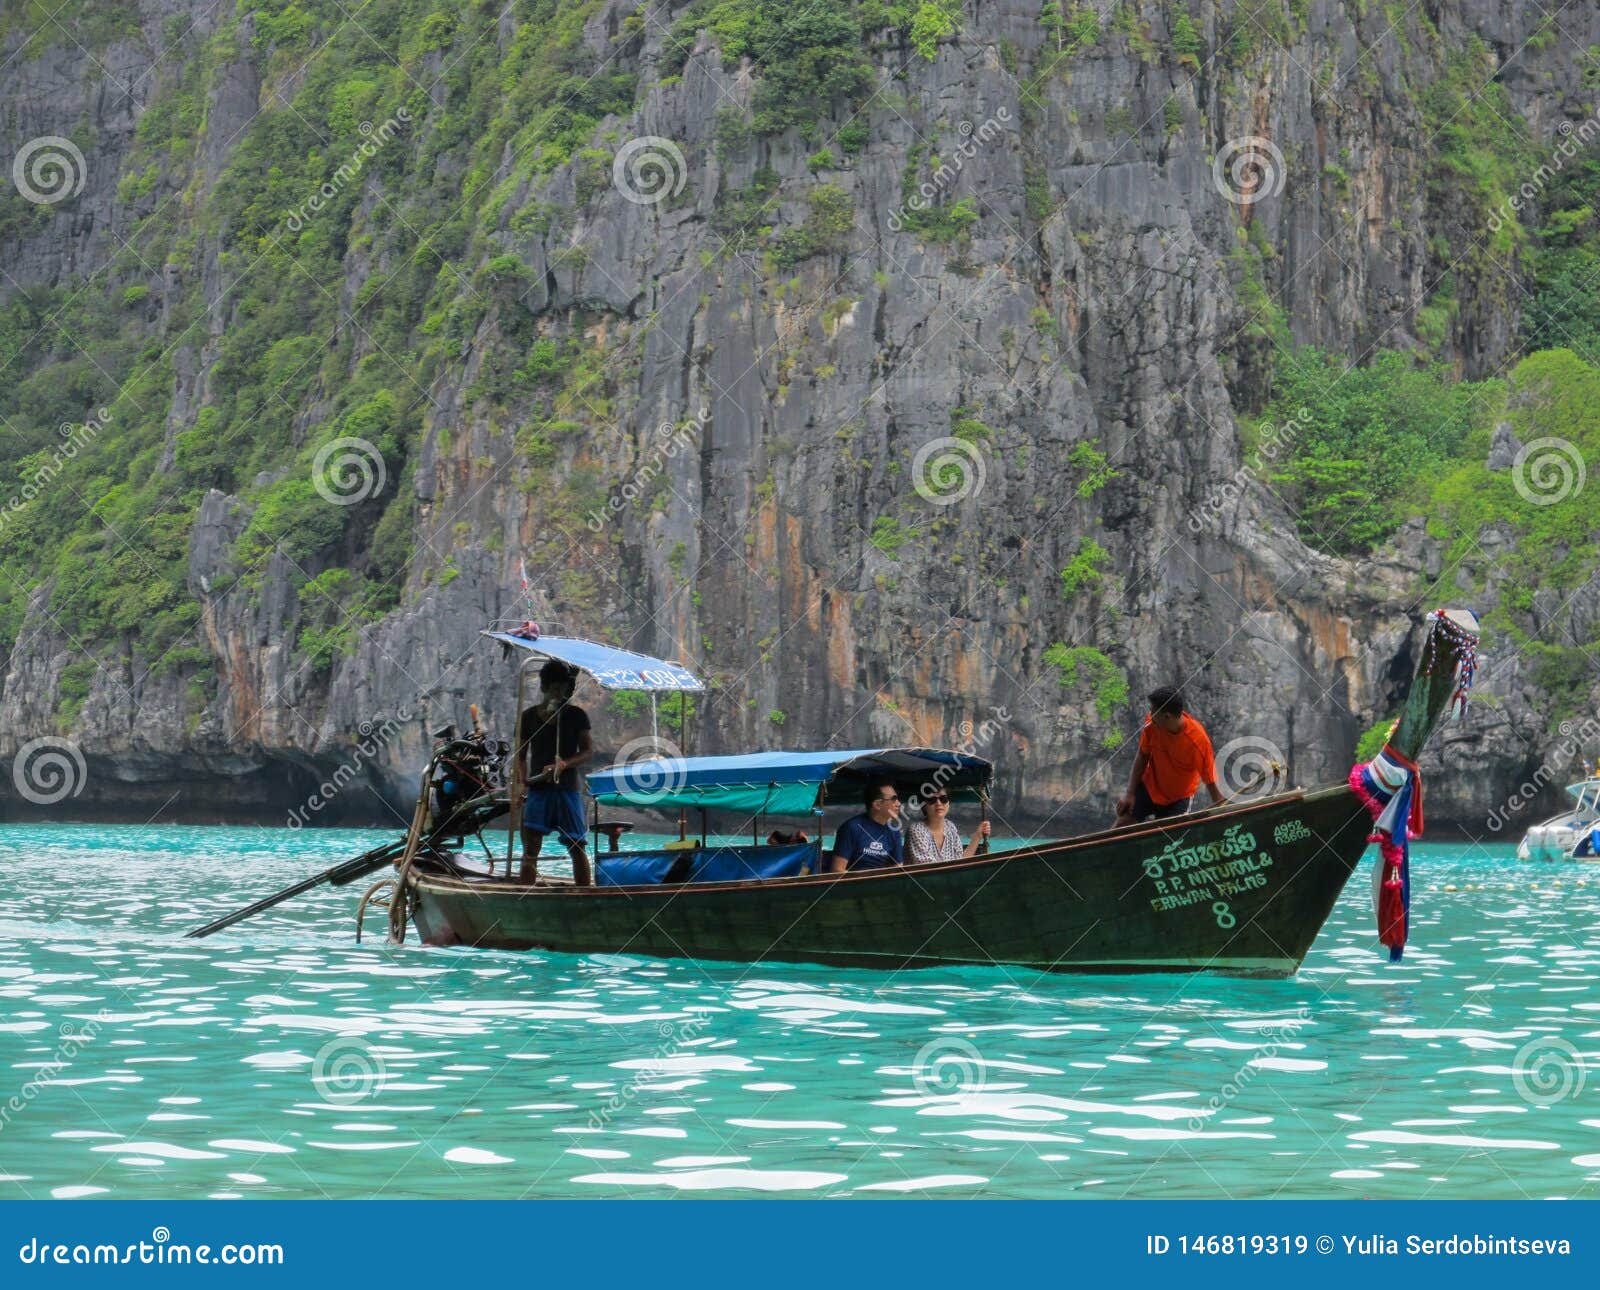 phuket, phuket thailand - 10 15 2012: wooden boat run by